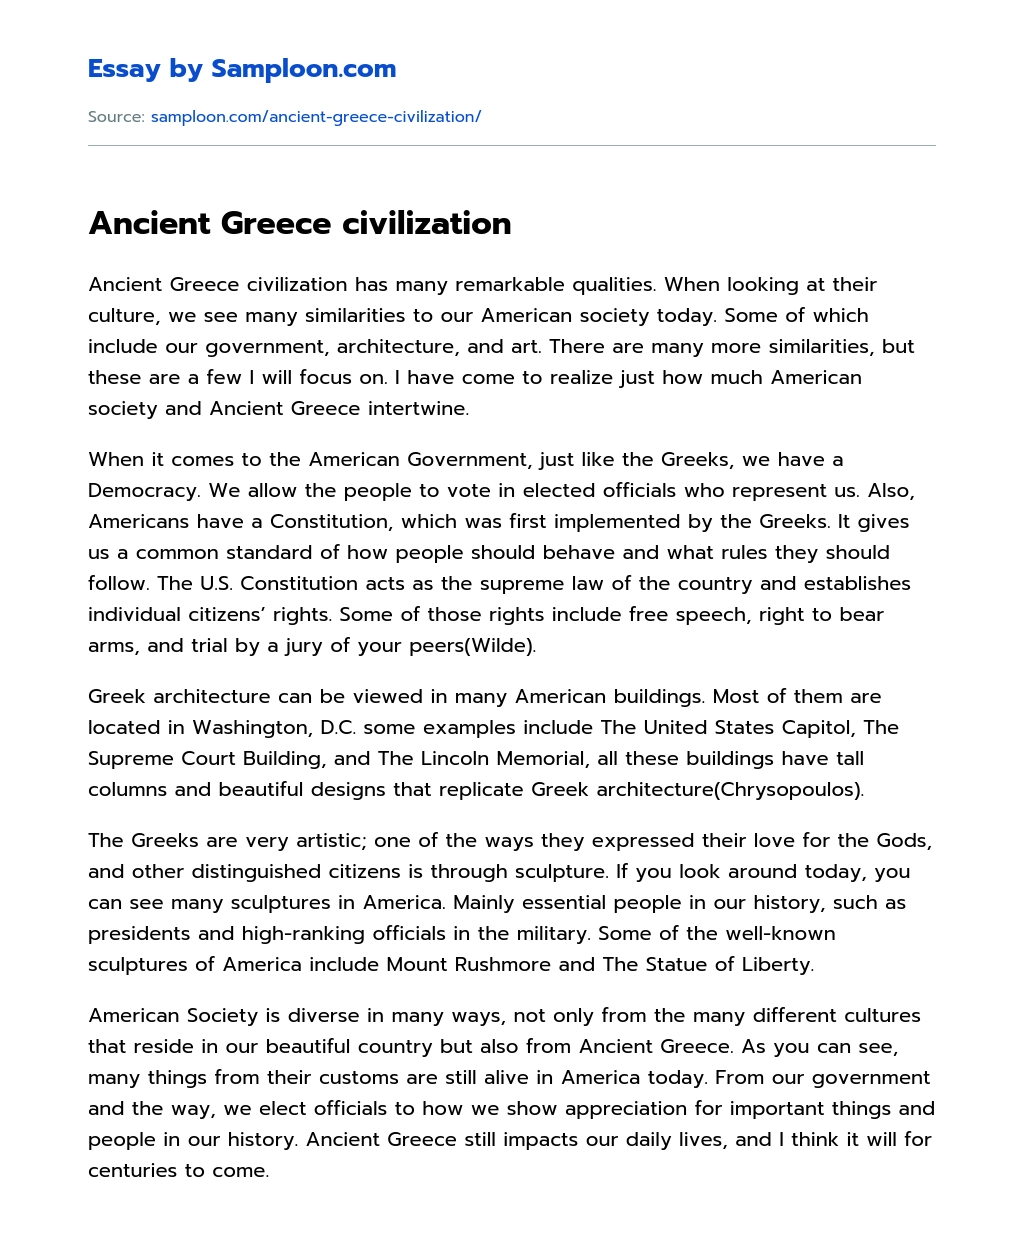 Ancient Greece civilization essay